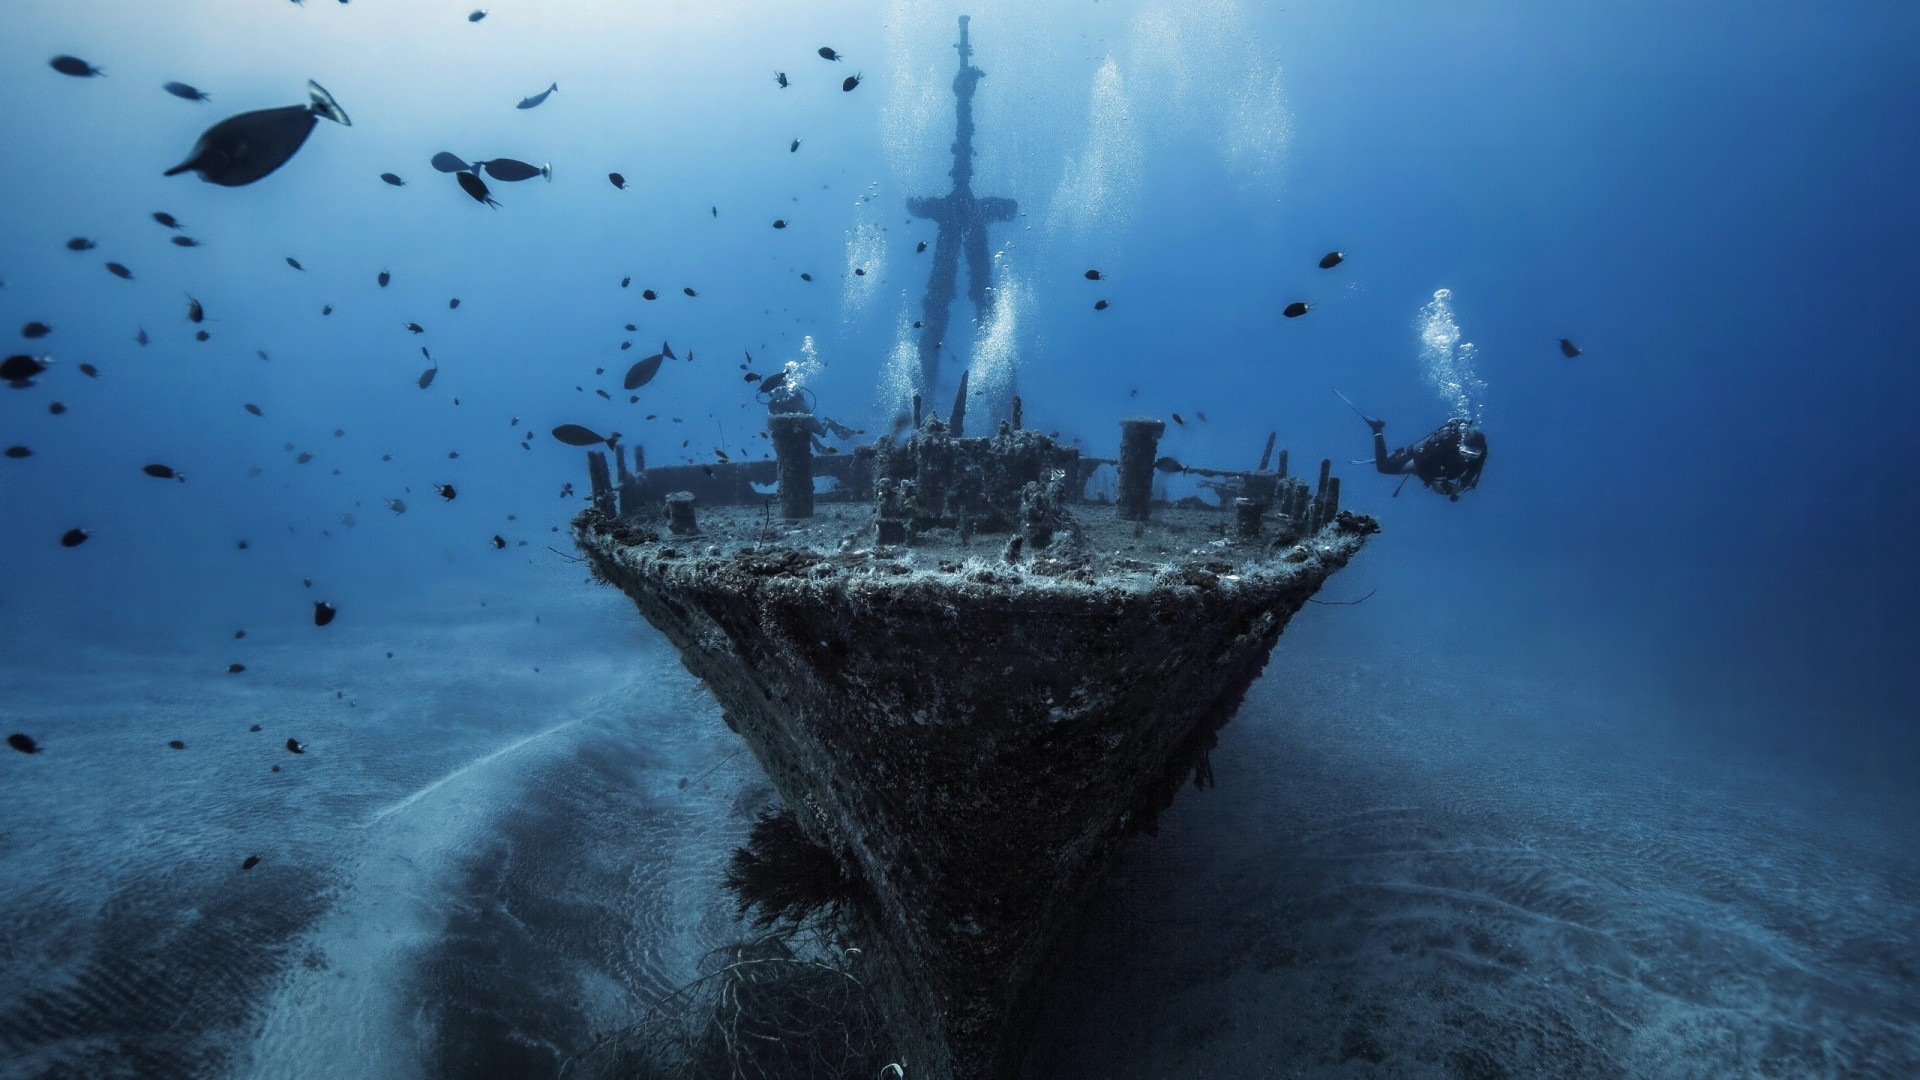 General 1920x1080 sea ship shipwreck water underwater fish divers bubbles blue silhouette